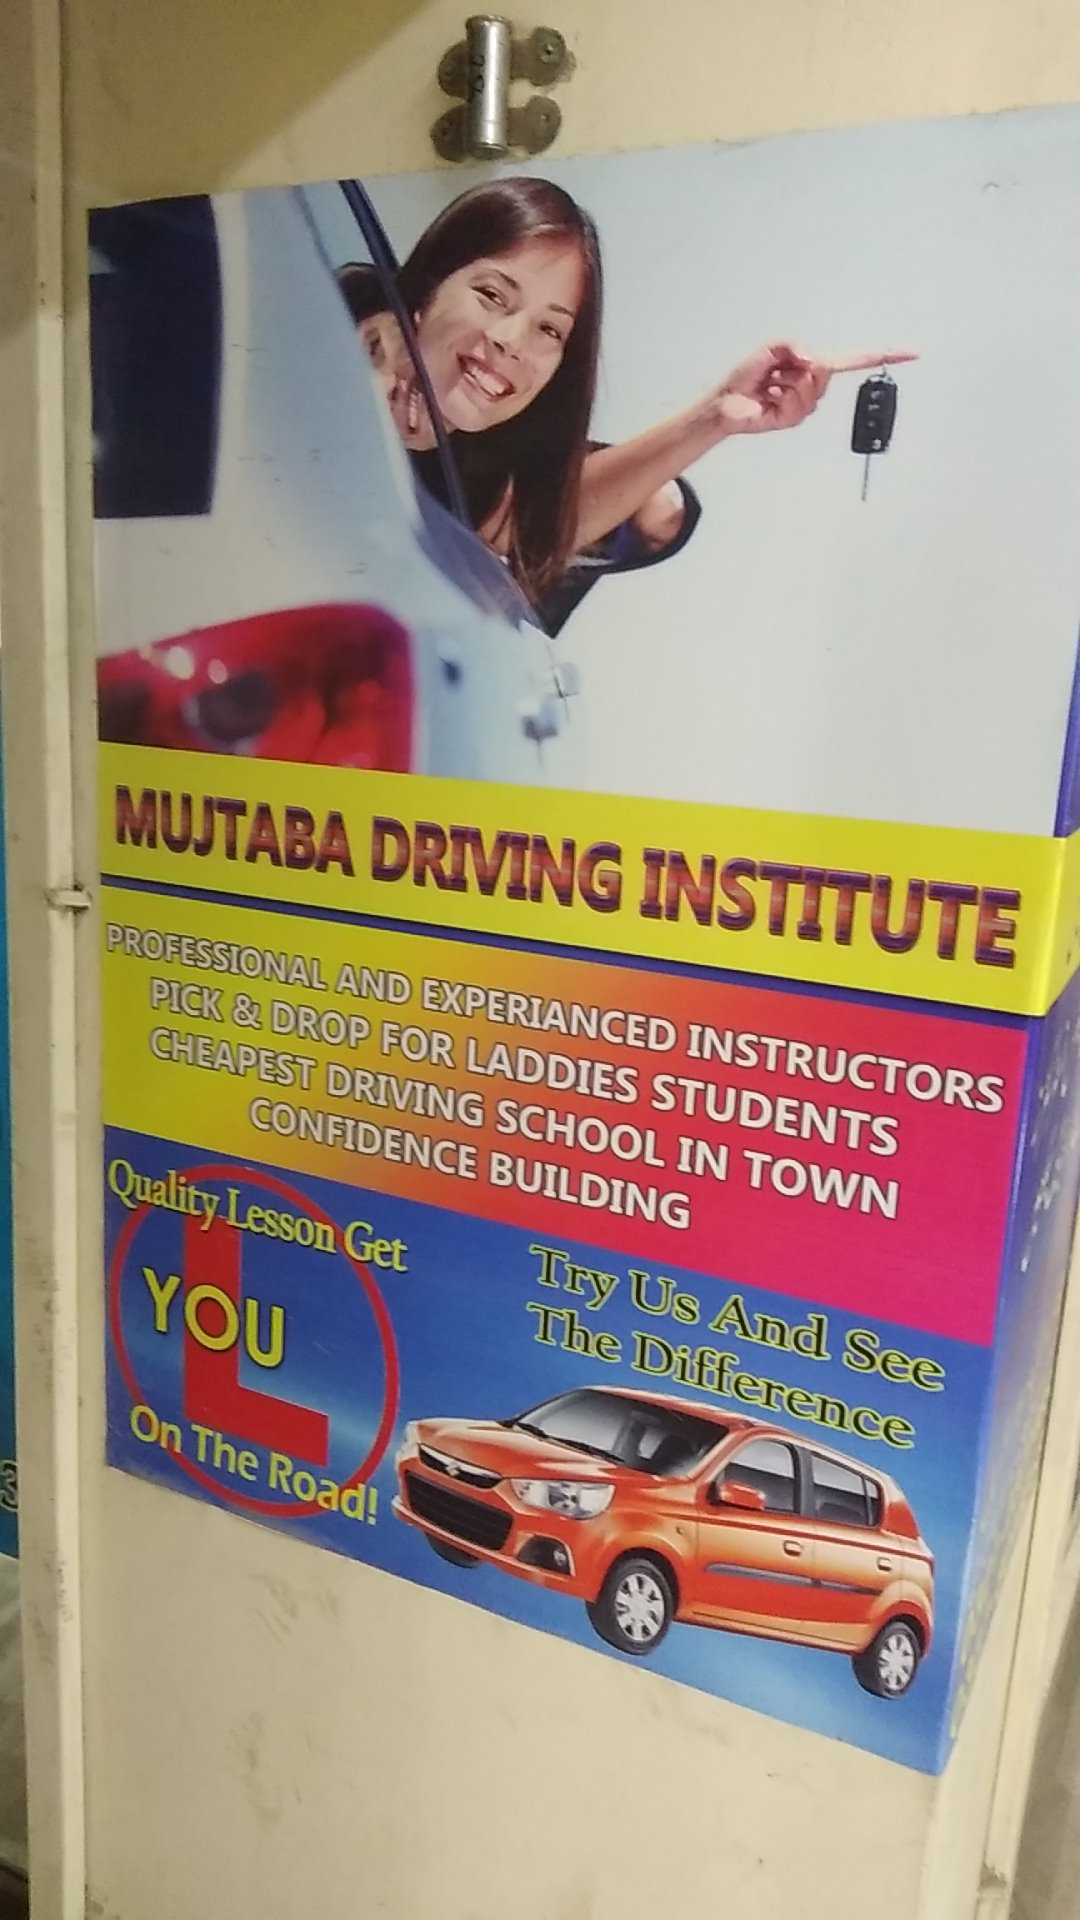 Mujtaba Driving Institute